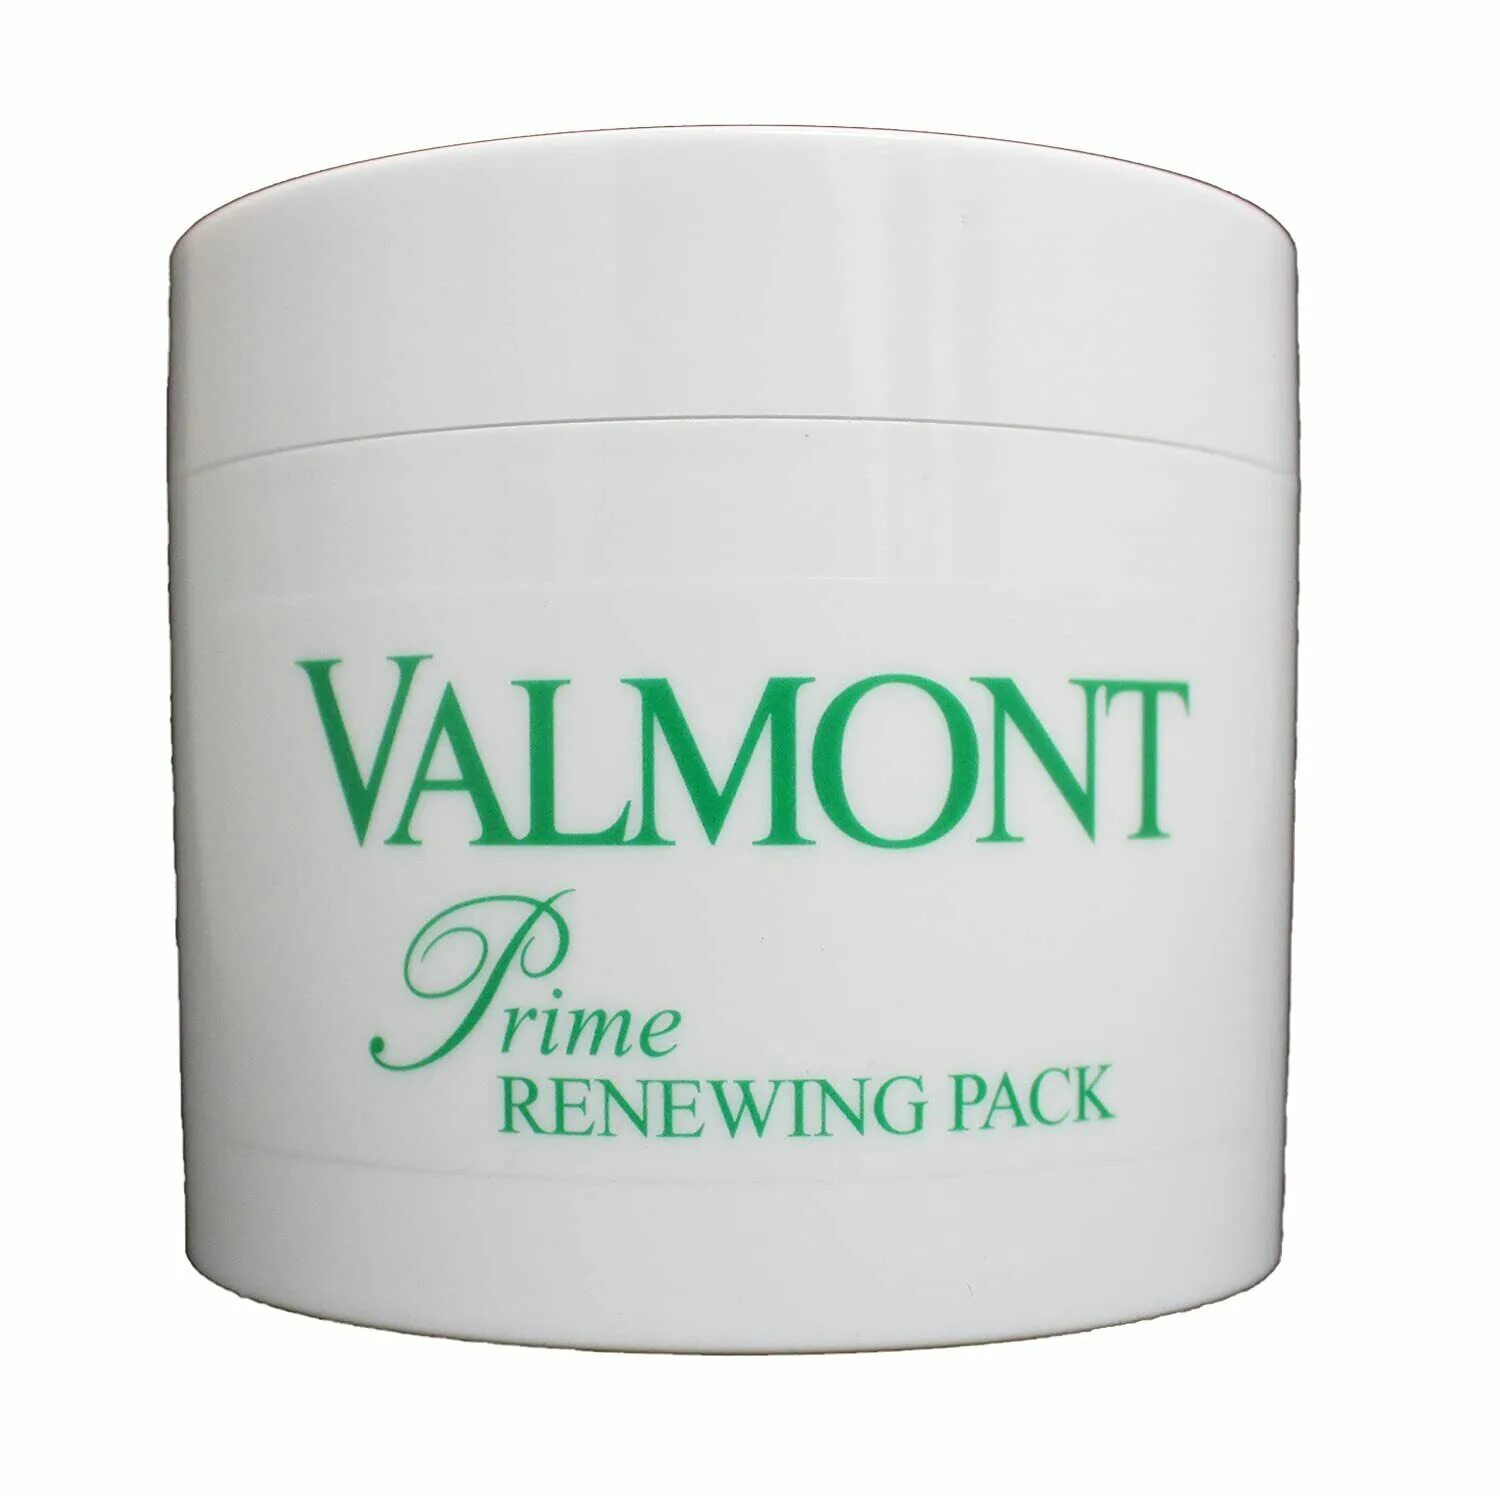 Valmont золушка. Valmont Золушка маска 200ml. Маска Valmont Prime Renewing Pack. Valmont Renewing Pack 200 мл. Valmont Prime Renewing Pack 200ml.